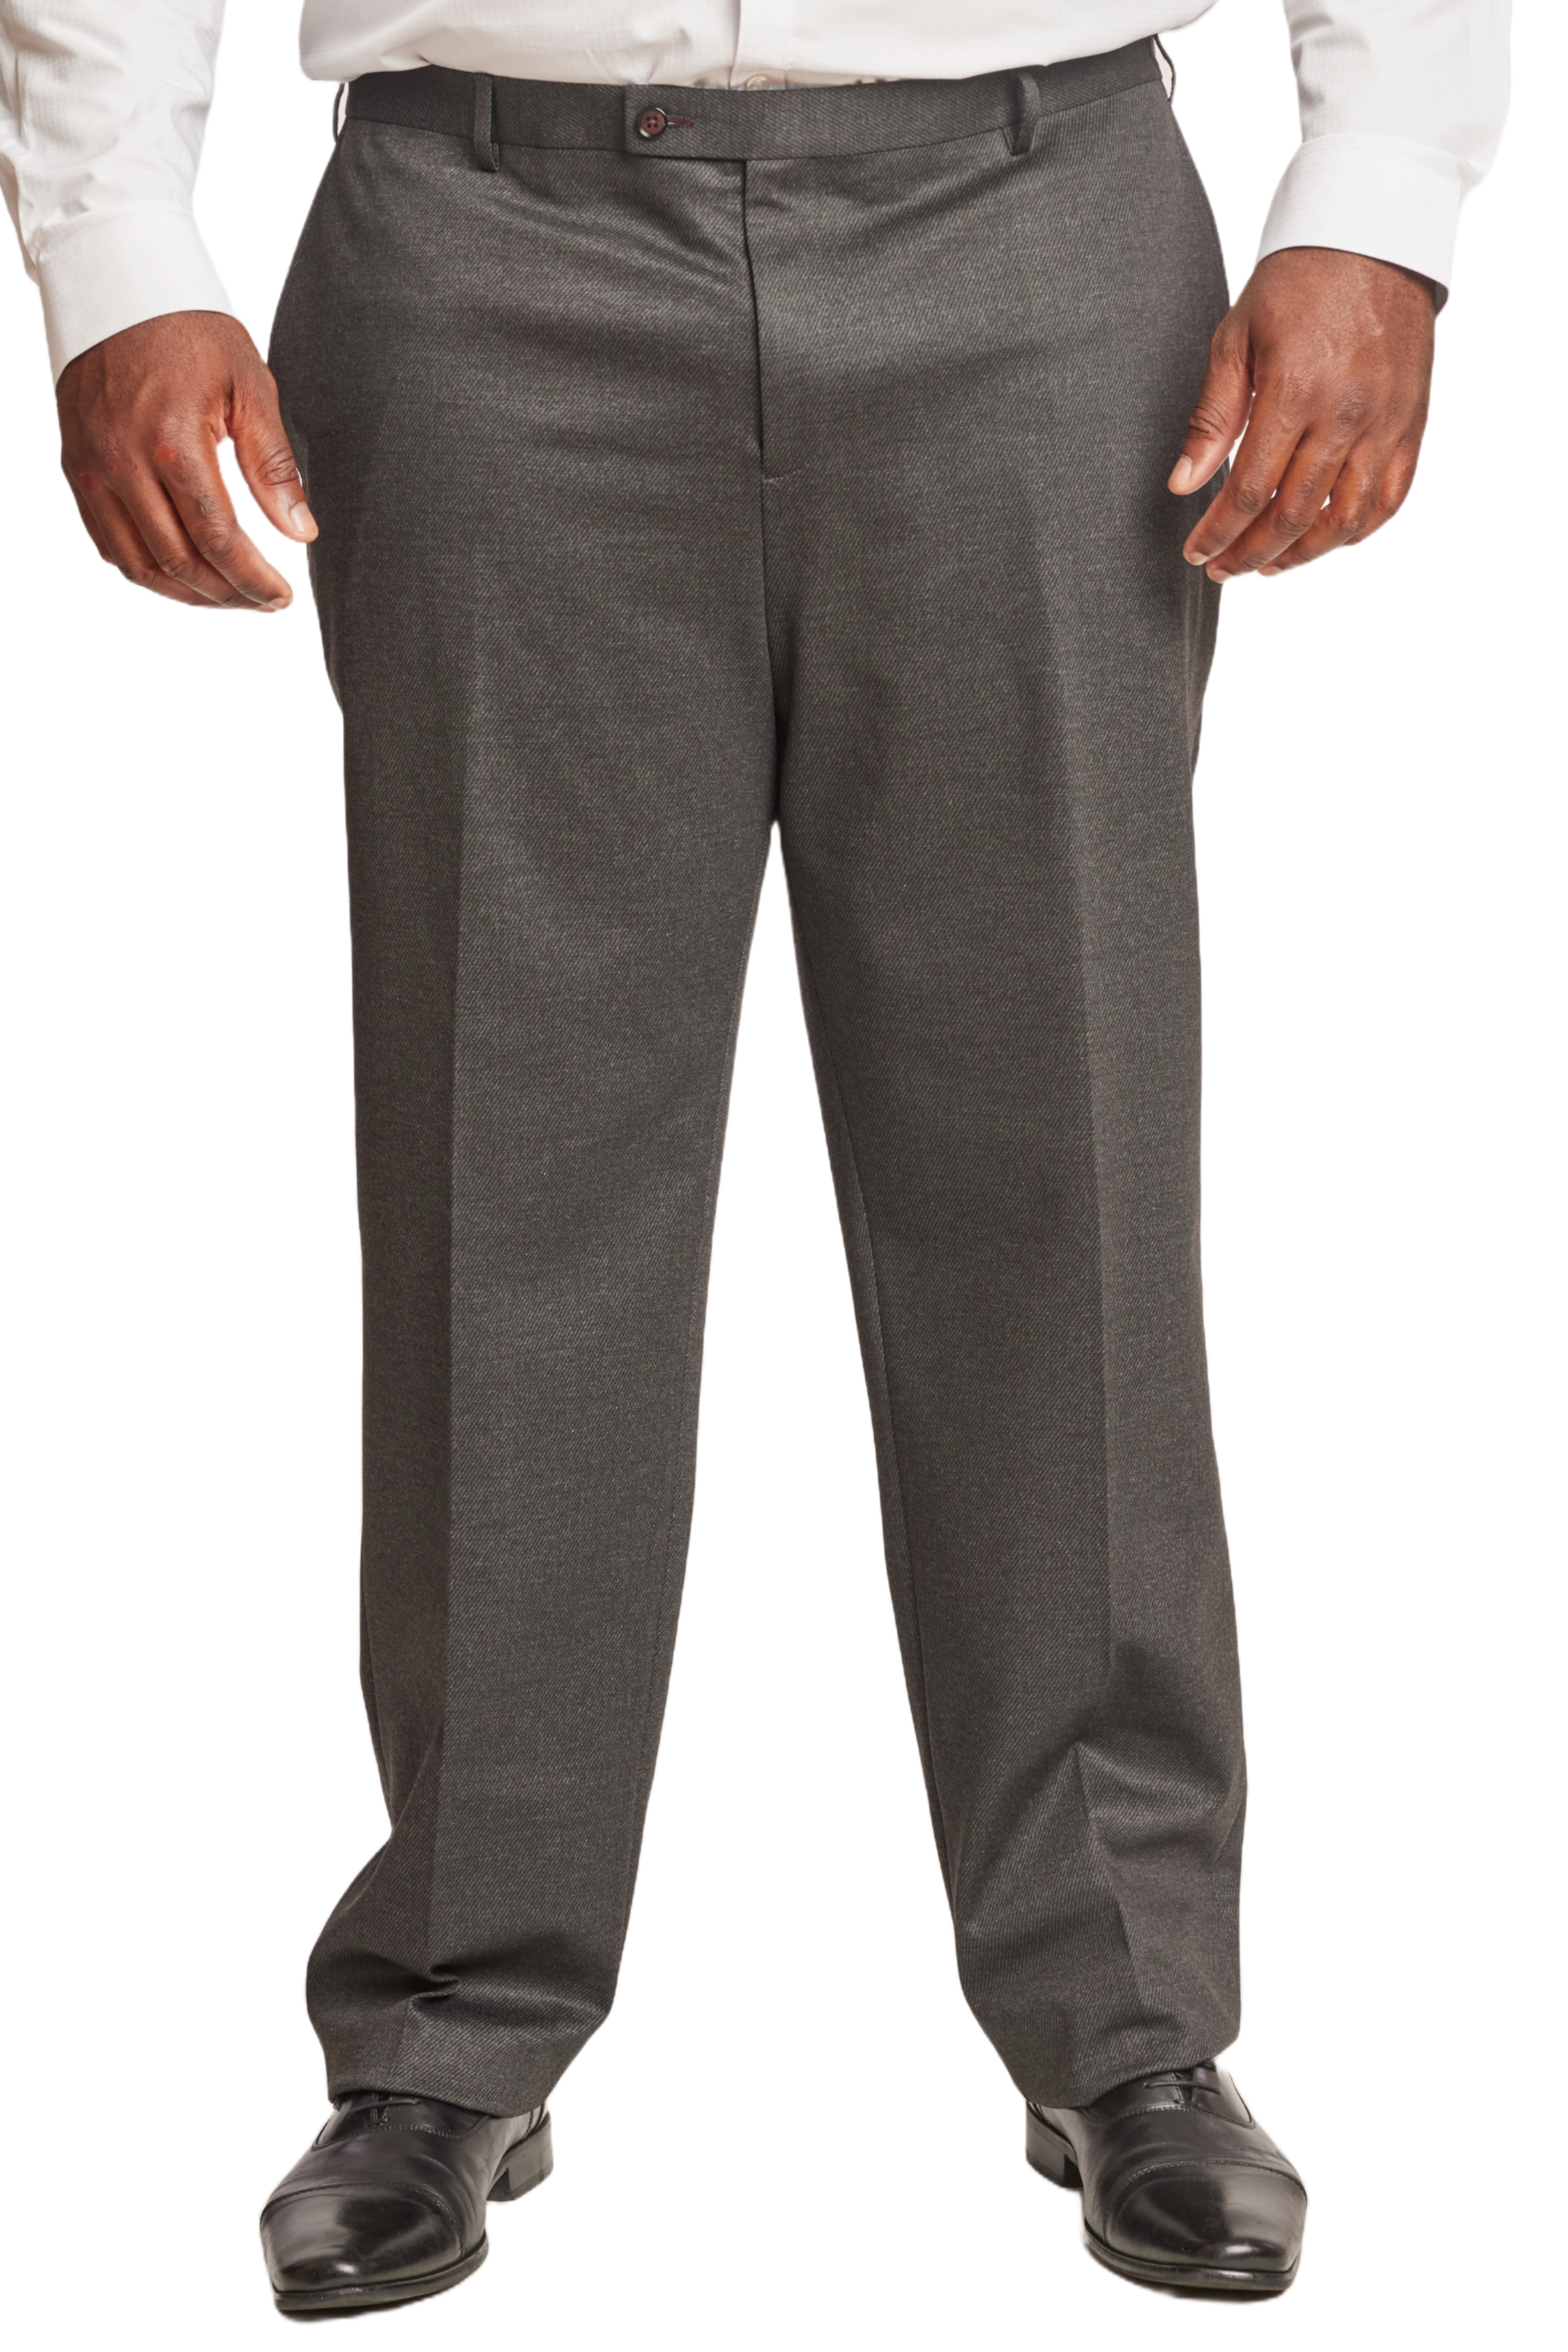 PANTS CUFF CORE Sports brushed fleece trousers - Men - Diadora Online Store  US